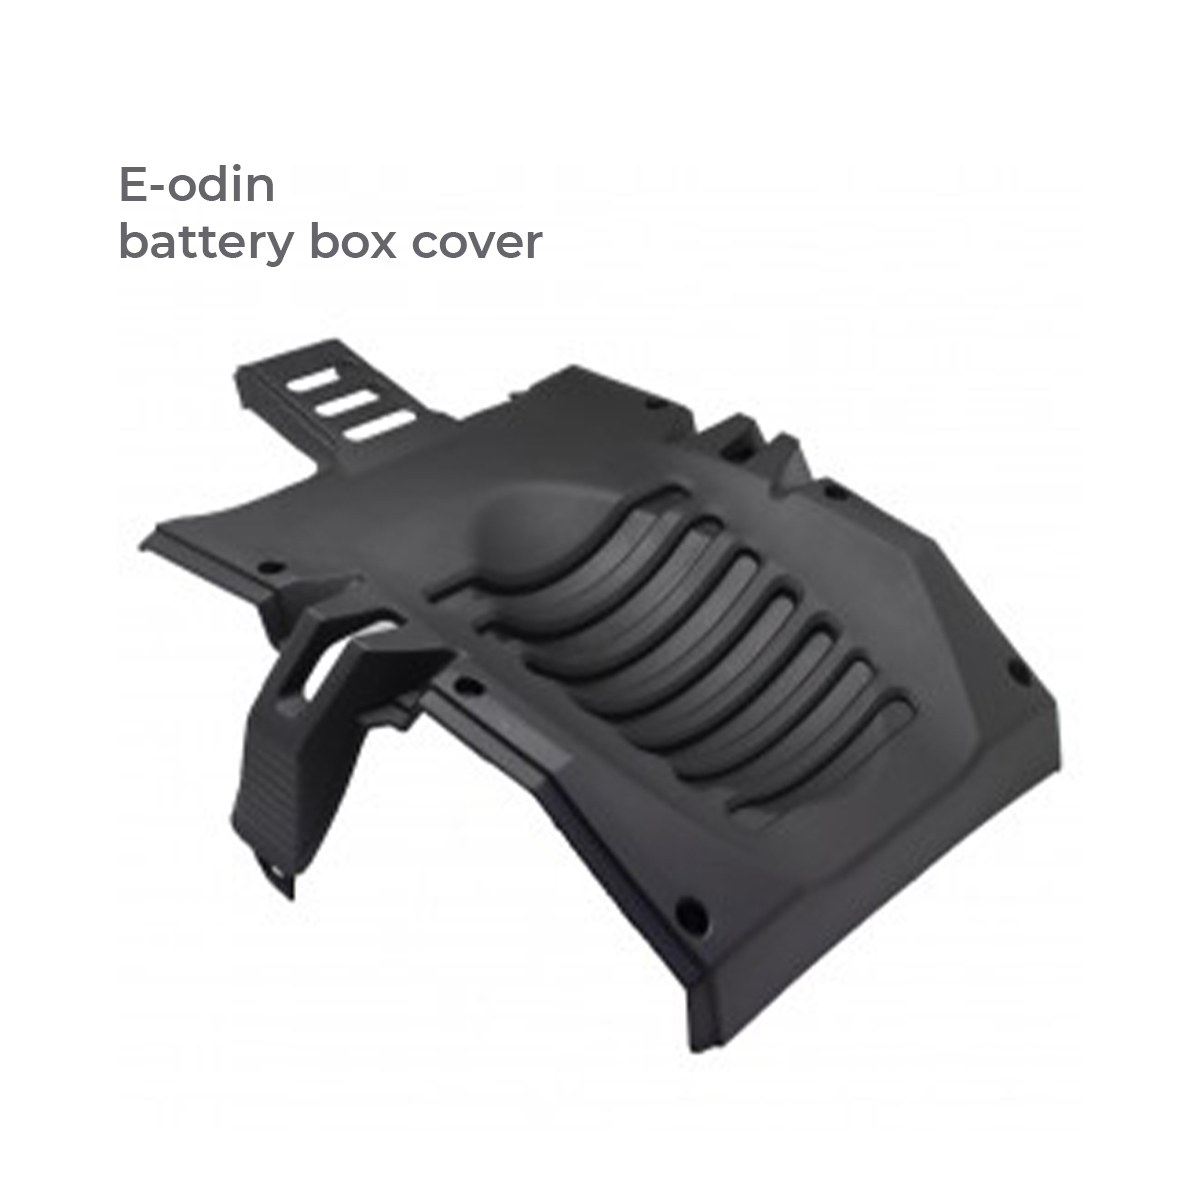 DAYI battery box cover  for Dayi E-odin 2.0 and E-odin 2.0 Pro e scooter e roller e-motorcycle spare parts